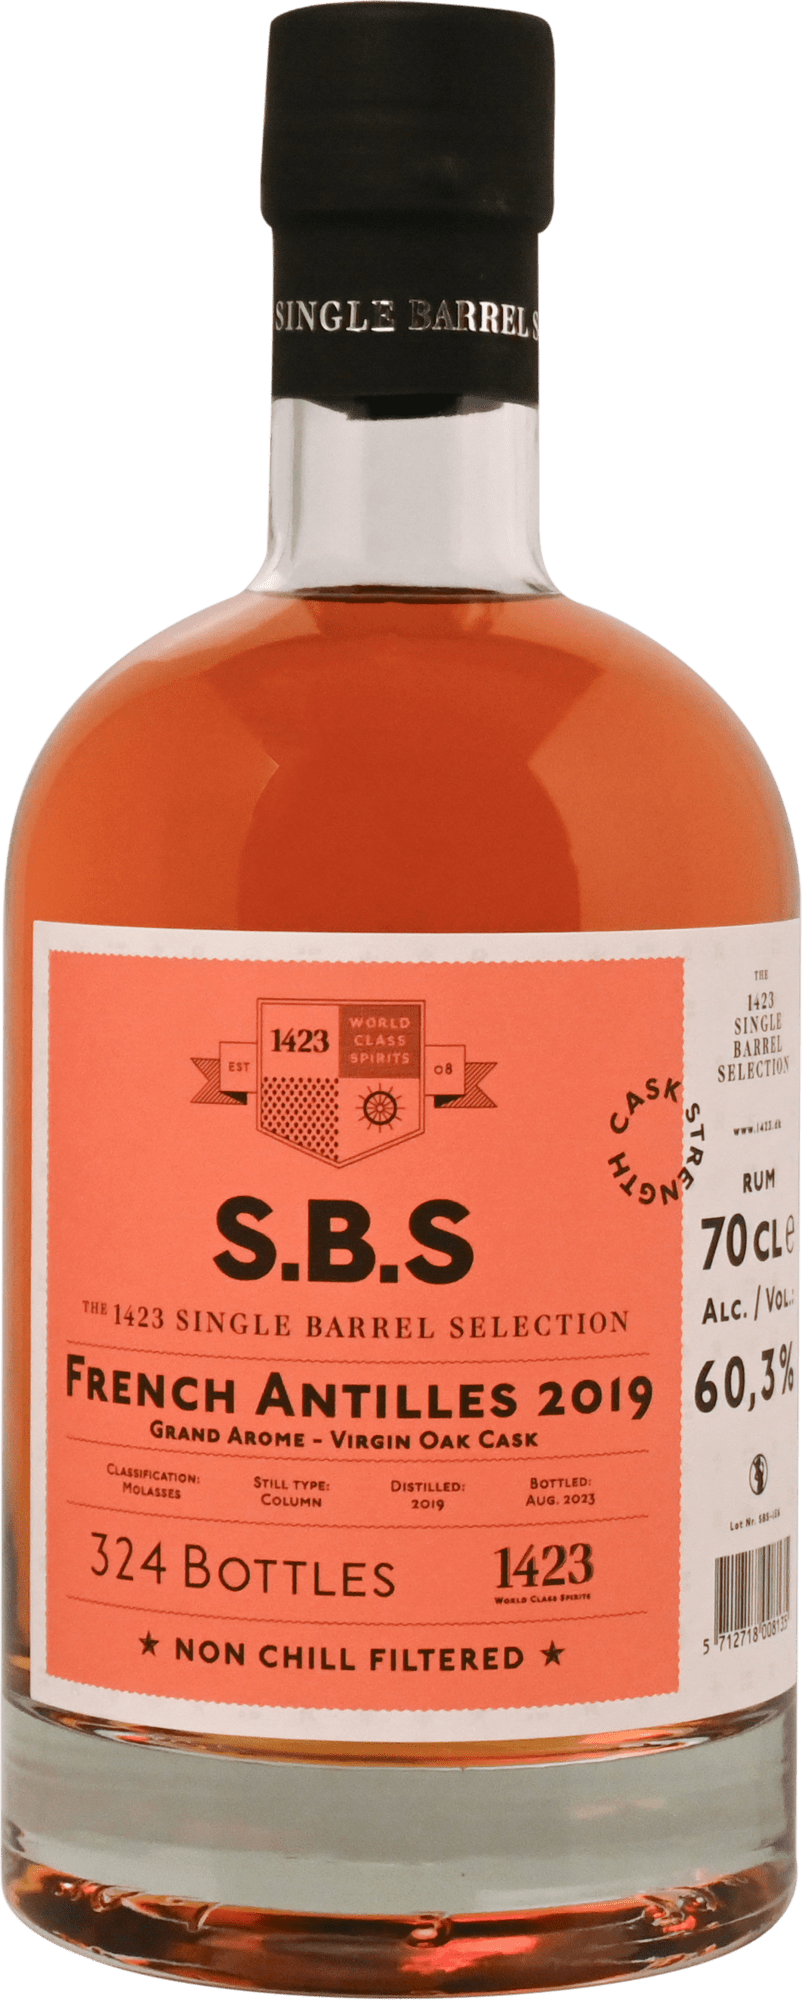 S.B.S French Antilles 2019 Grand Arome Virgin Oak Cask, GIFT